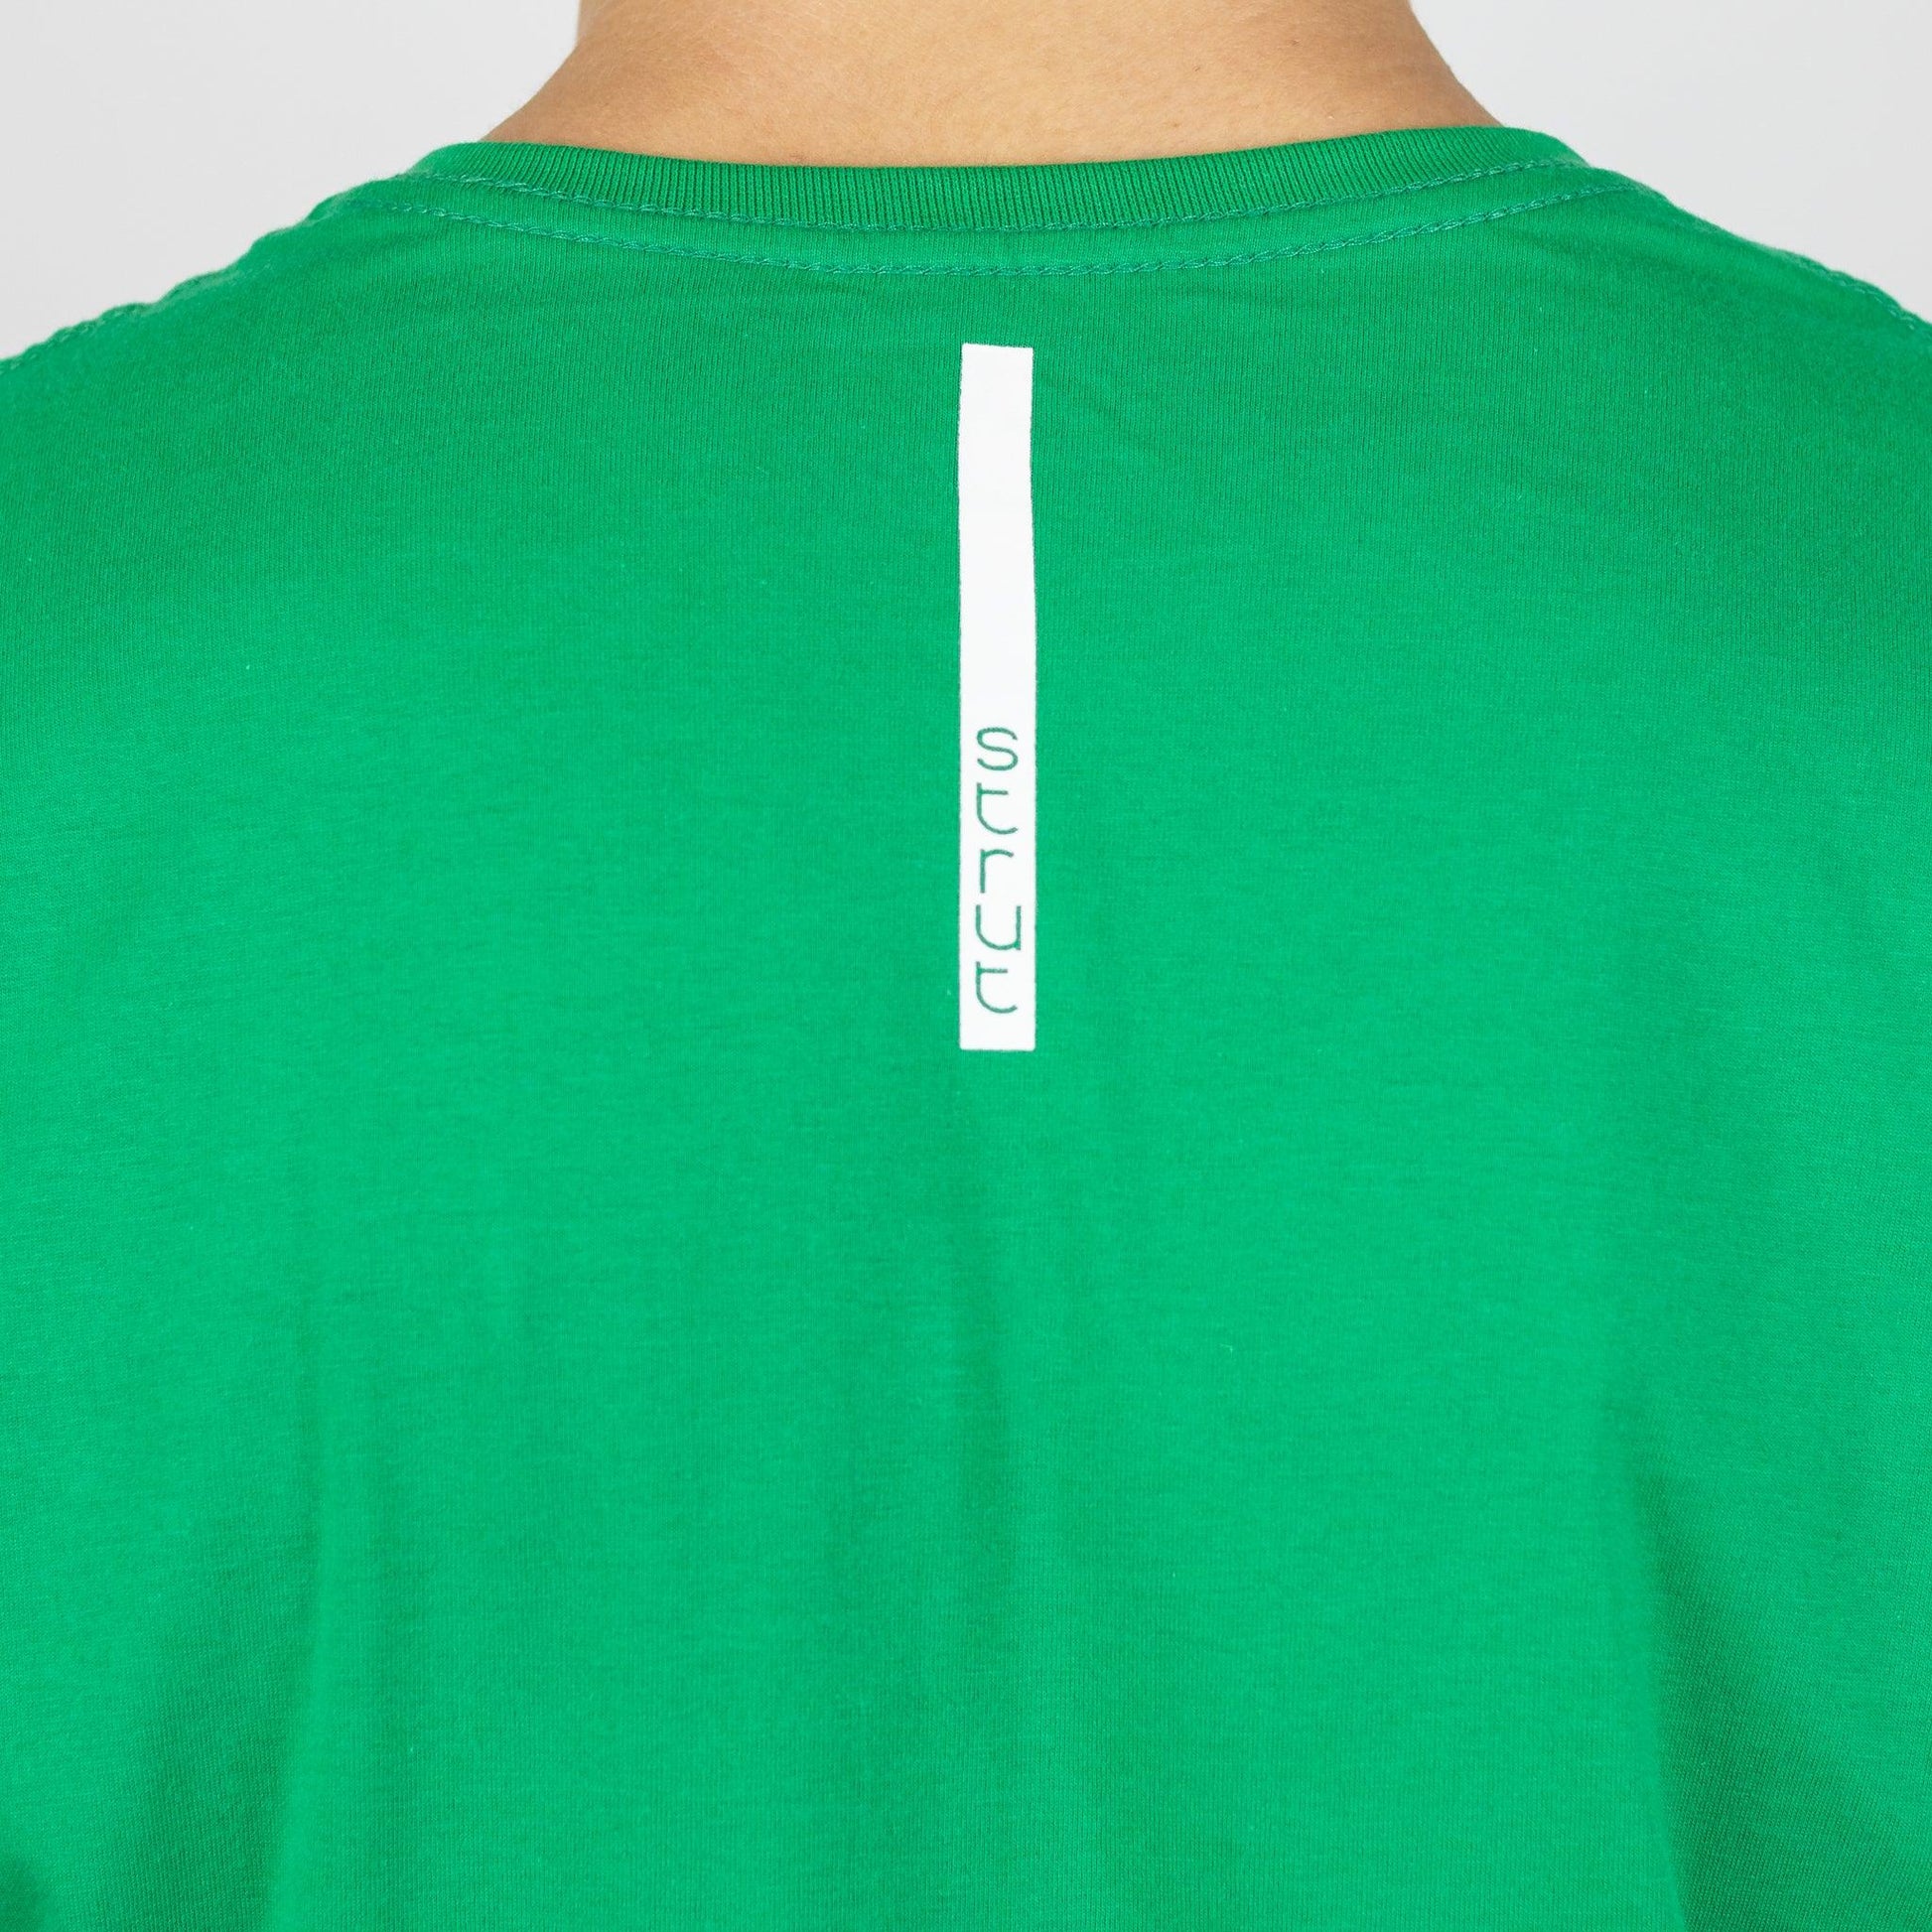 Camiseta Básica Strut Gola Careca Bandeira Texas Verde - Strut